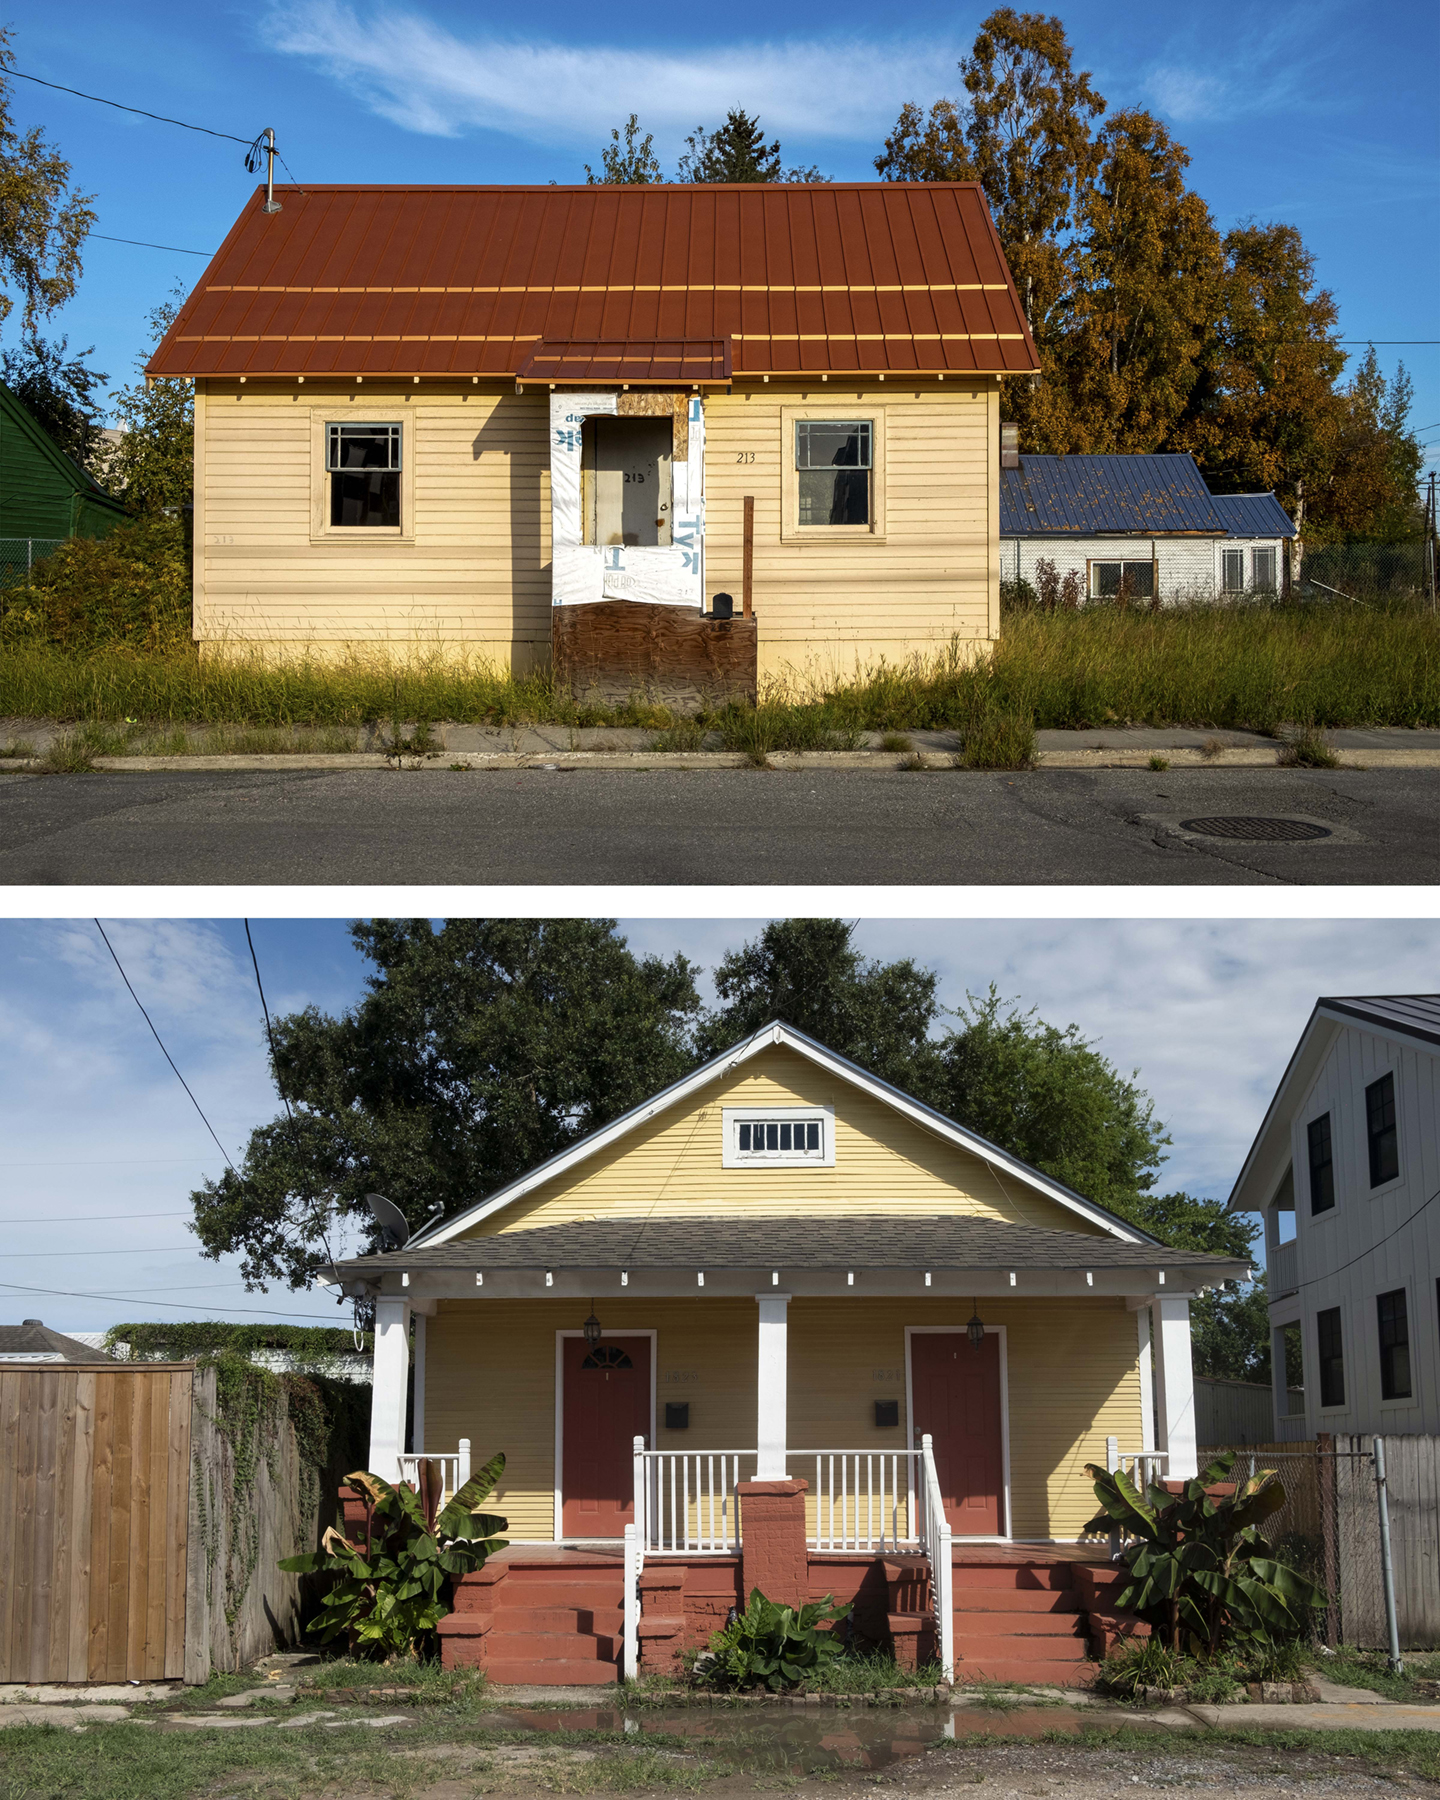 Yellow homes in Louisiana and Alaska, courtesy of the artist